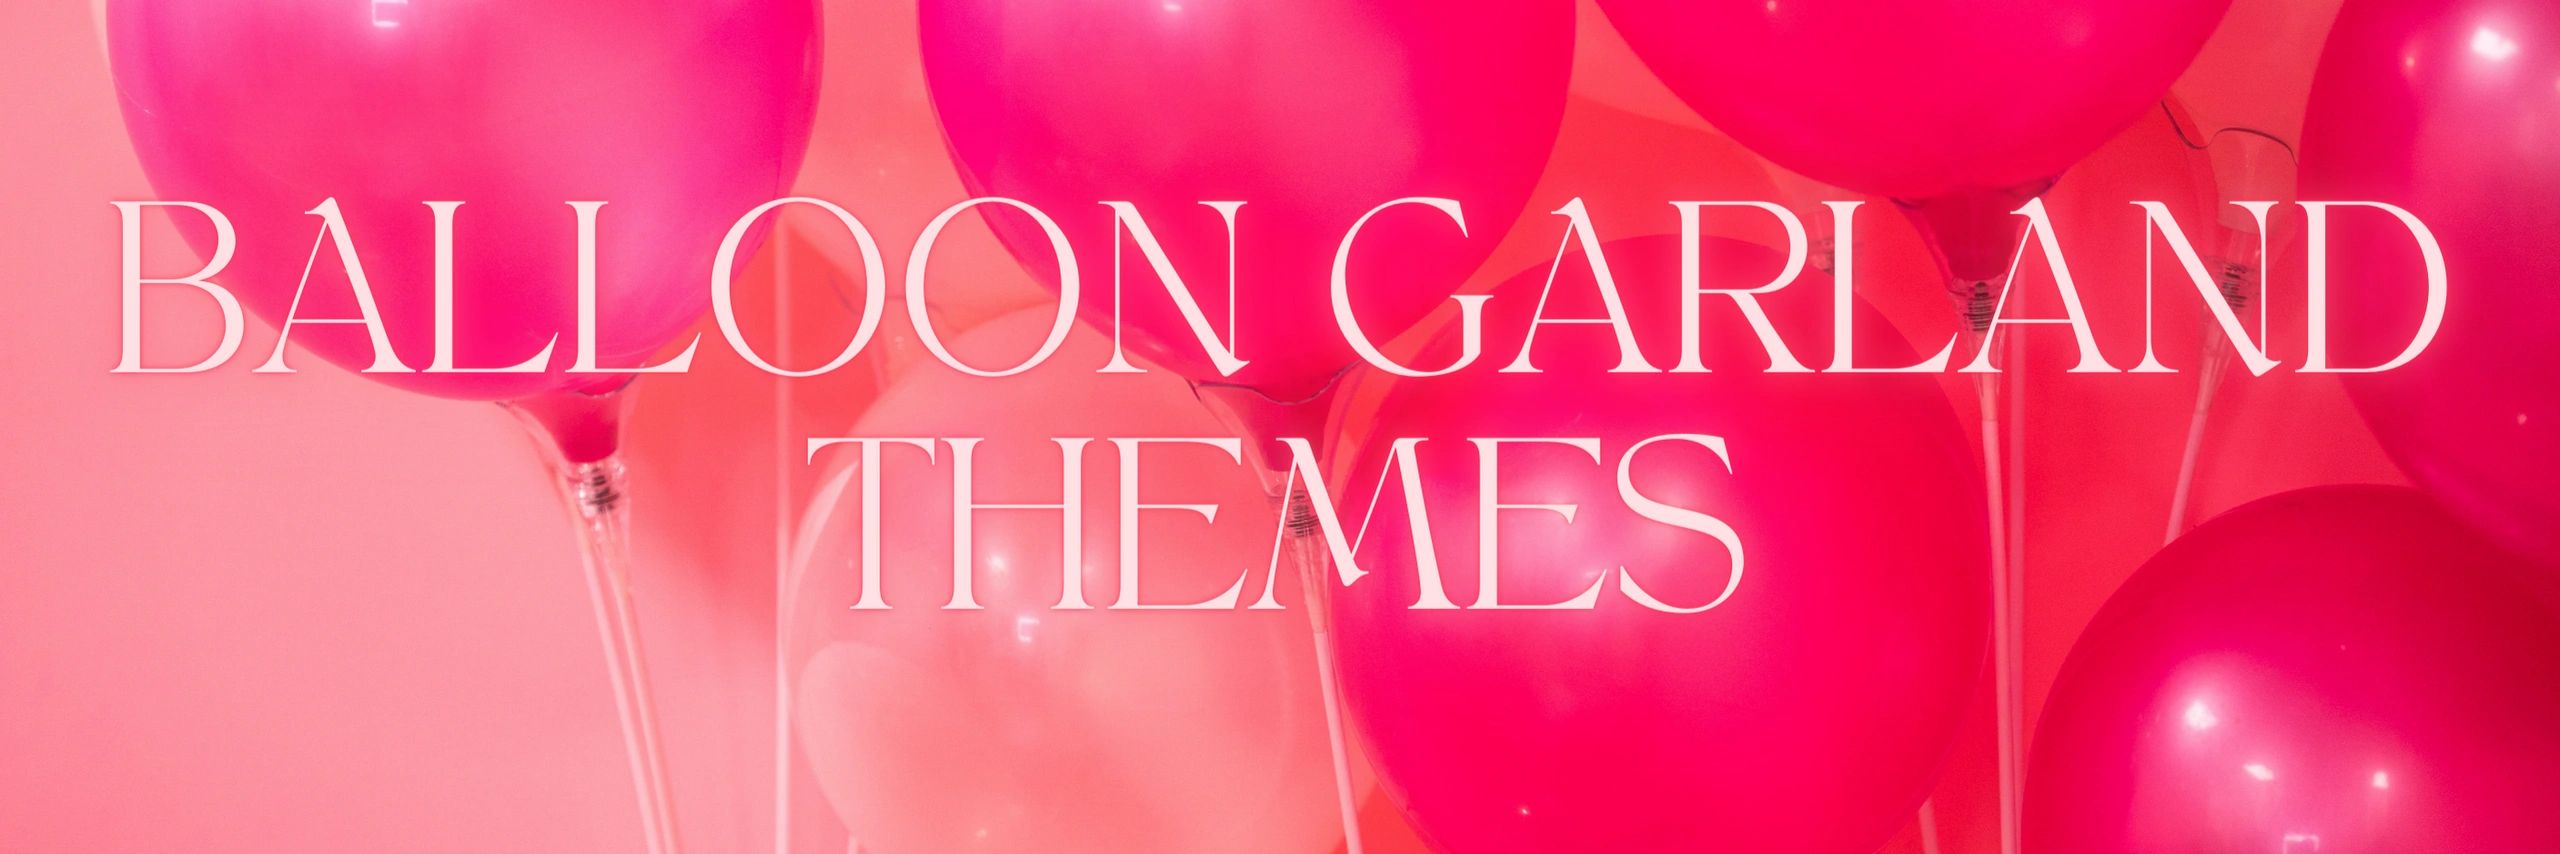 Balloon Garland Themes